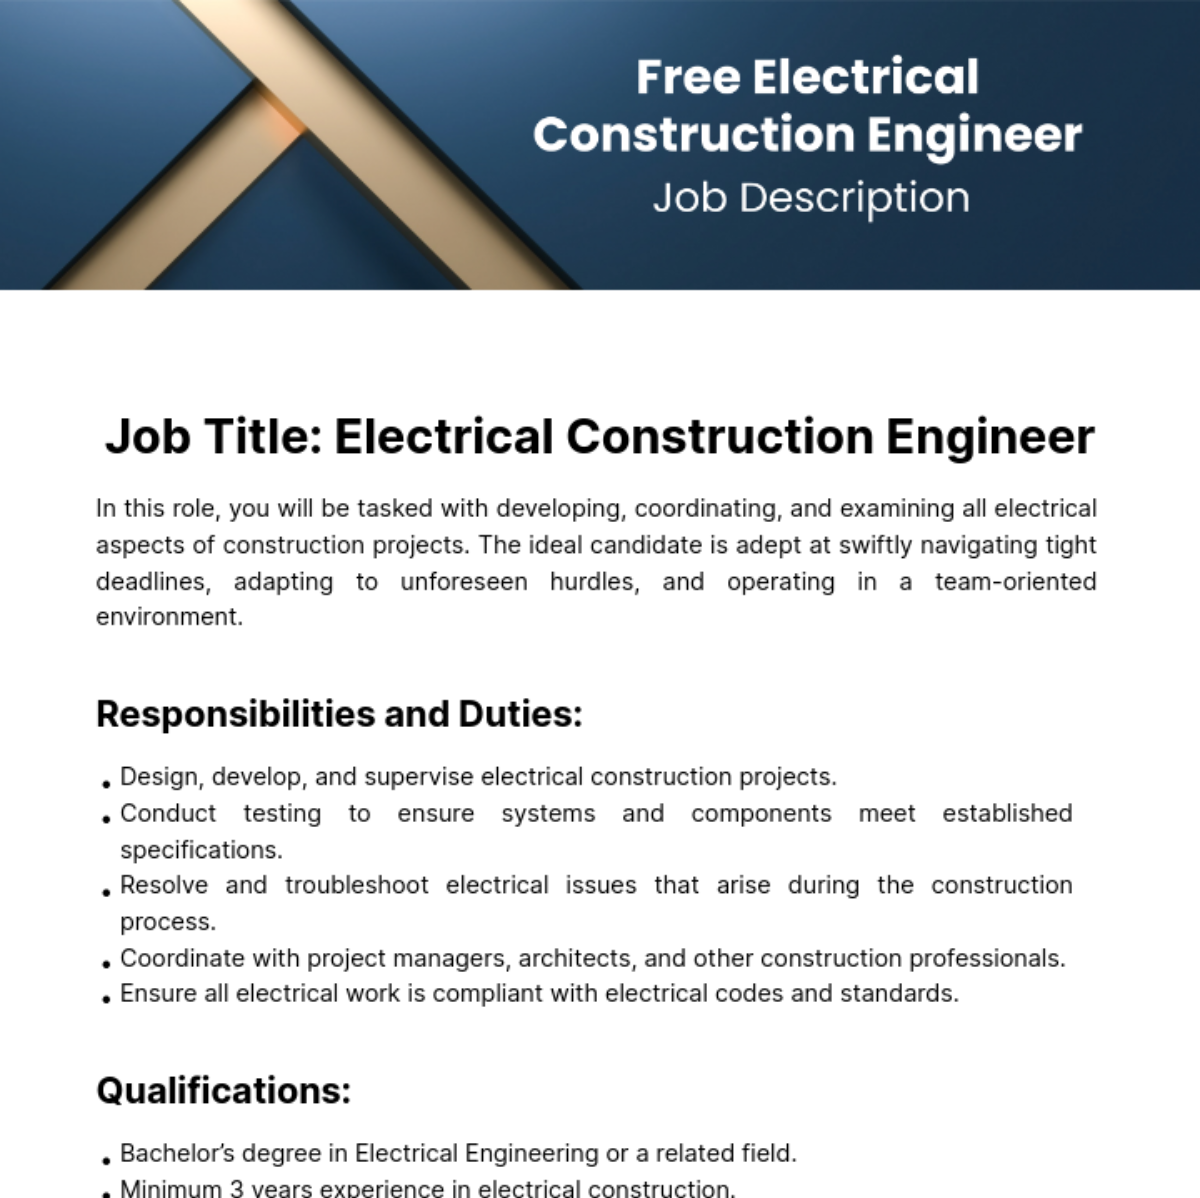 Free Electrical Construction Engineer Job Description Template